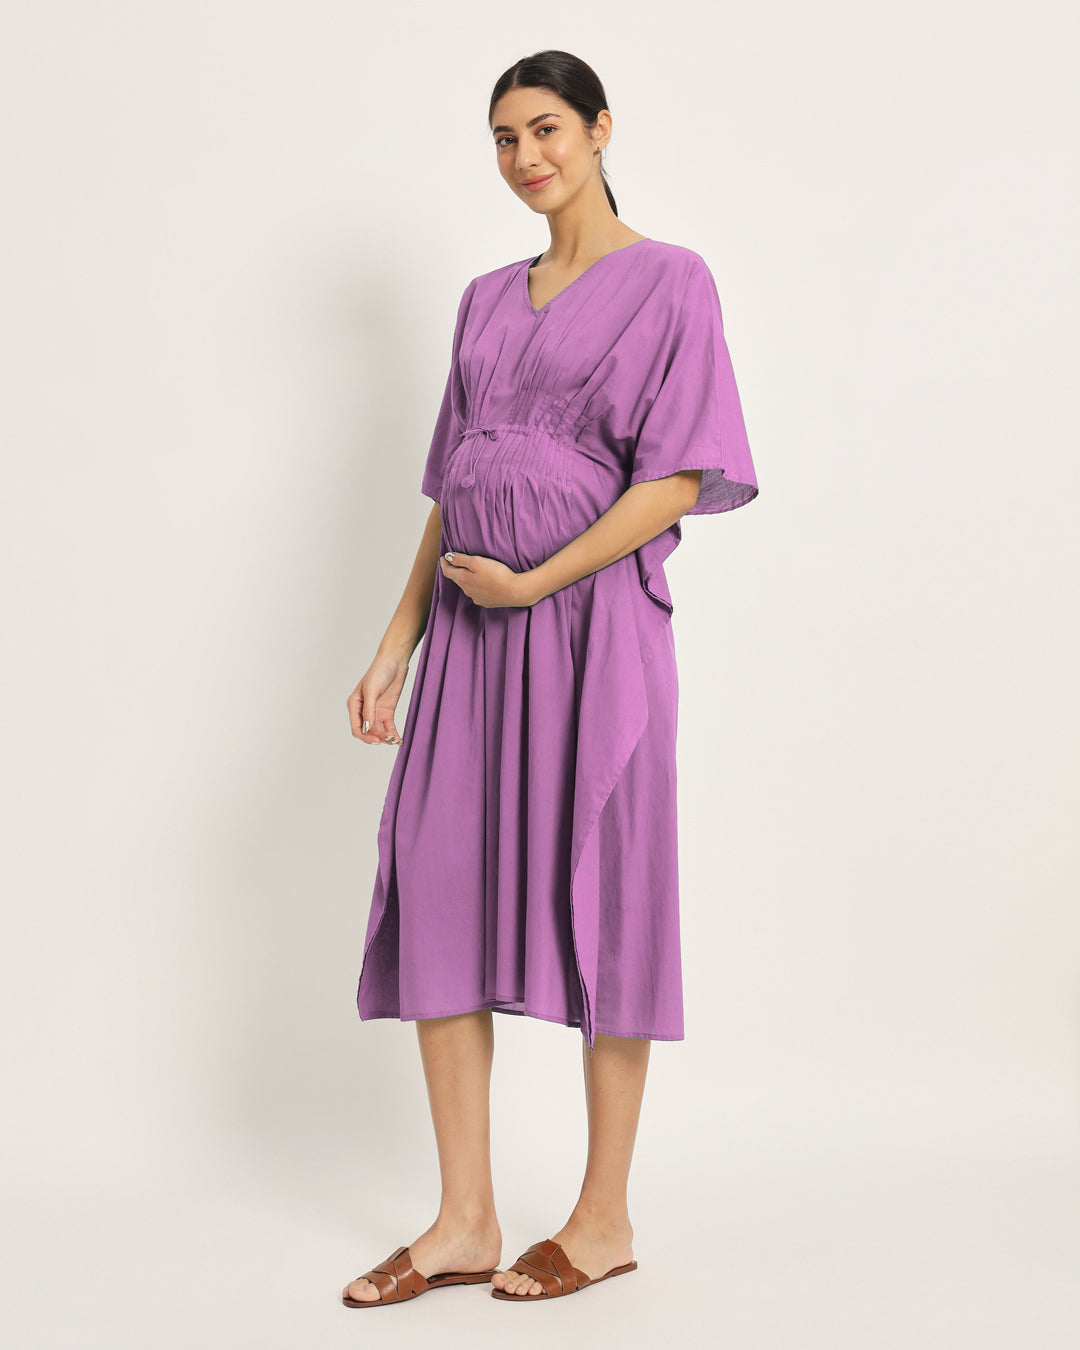 Combo: Iris Pink & Wisteria Purple Mommy Mode Maternity & Nursing Dress